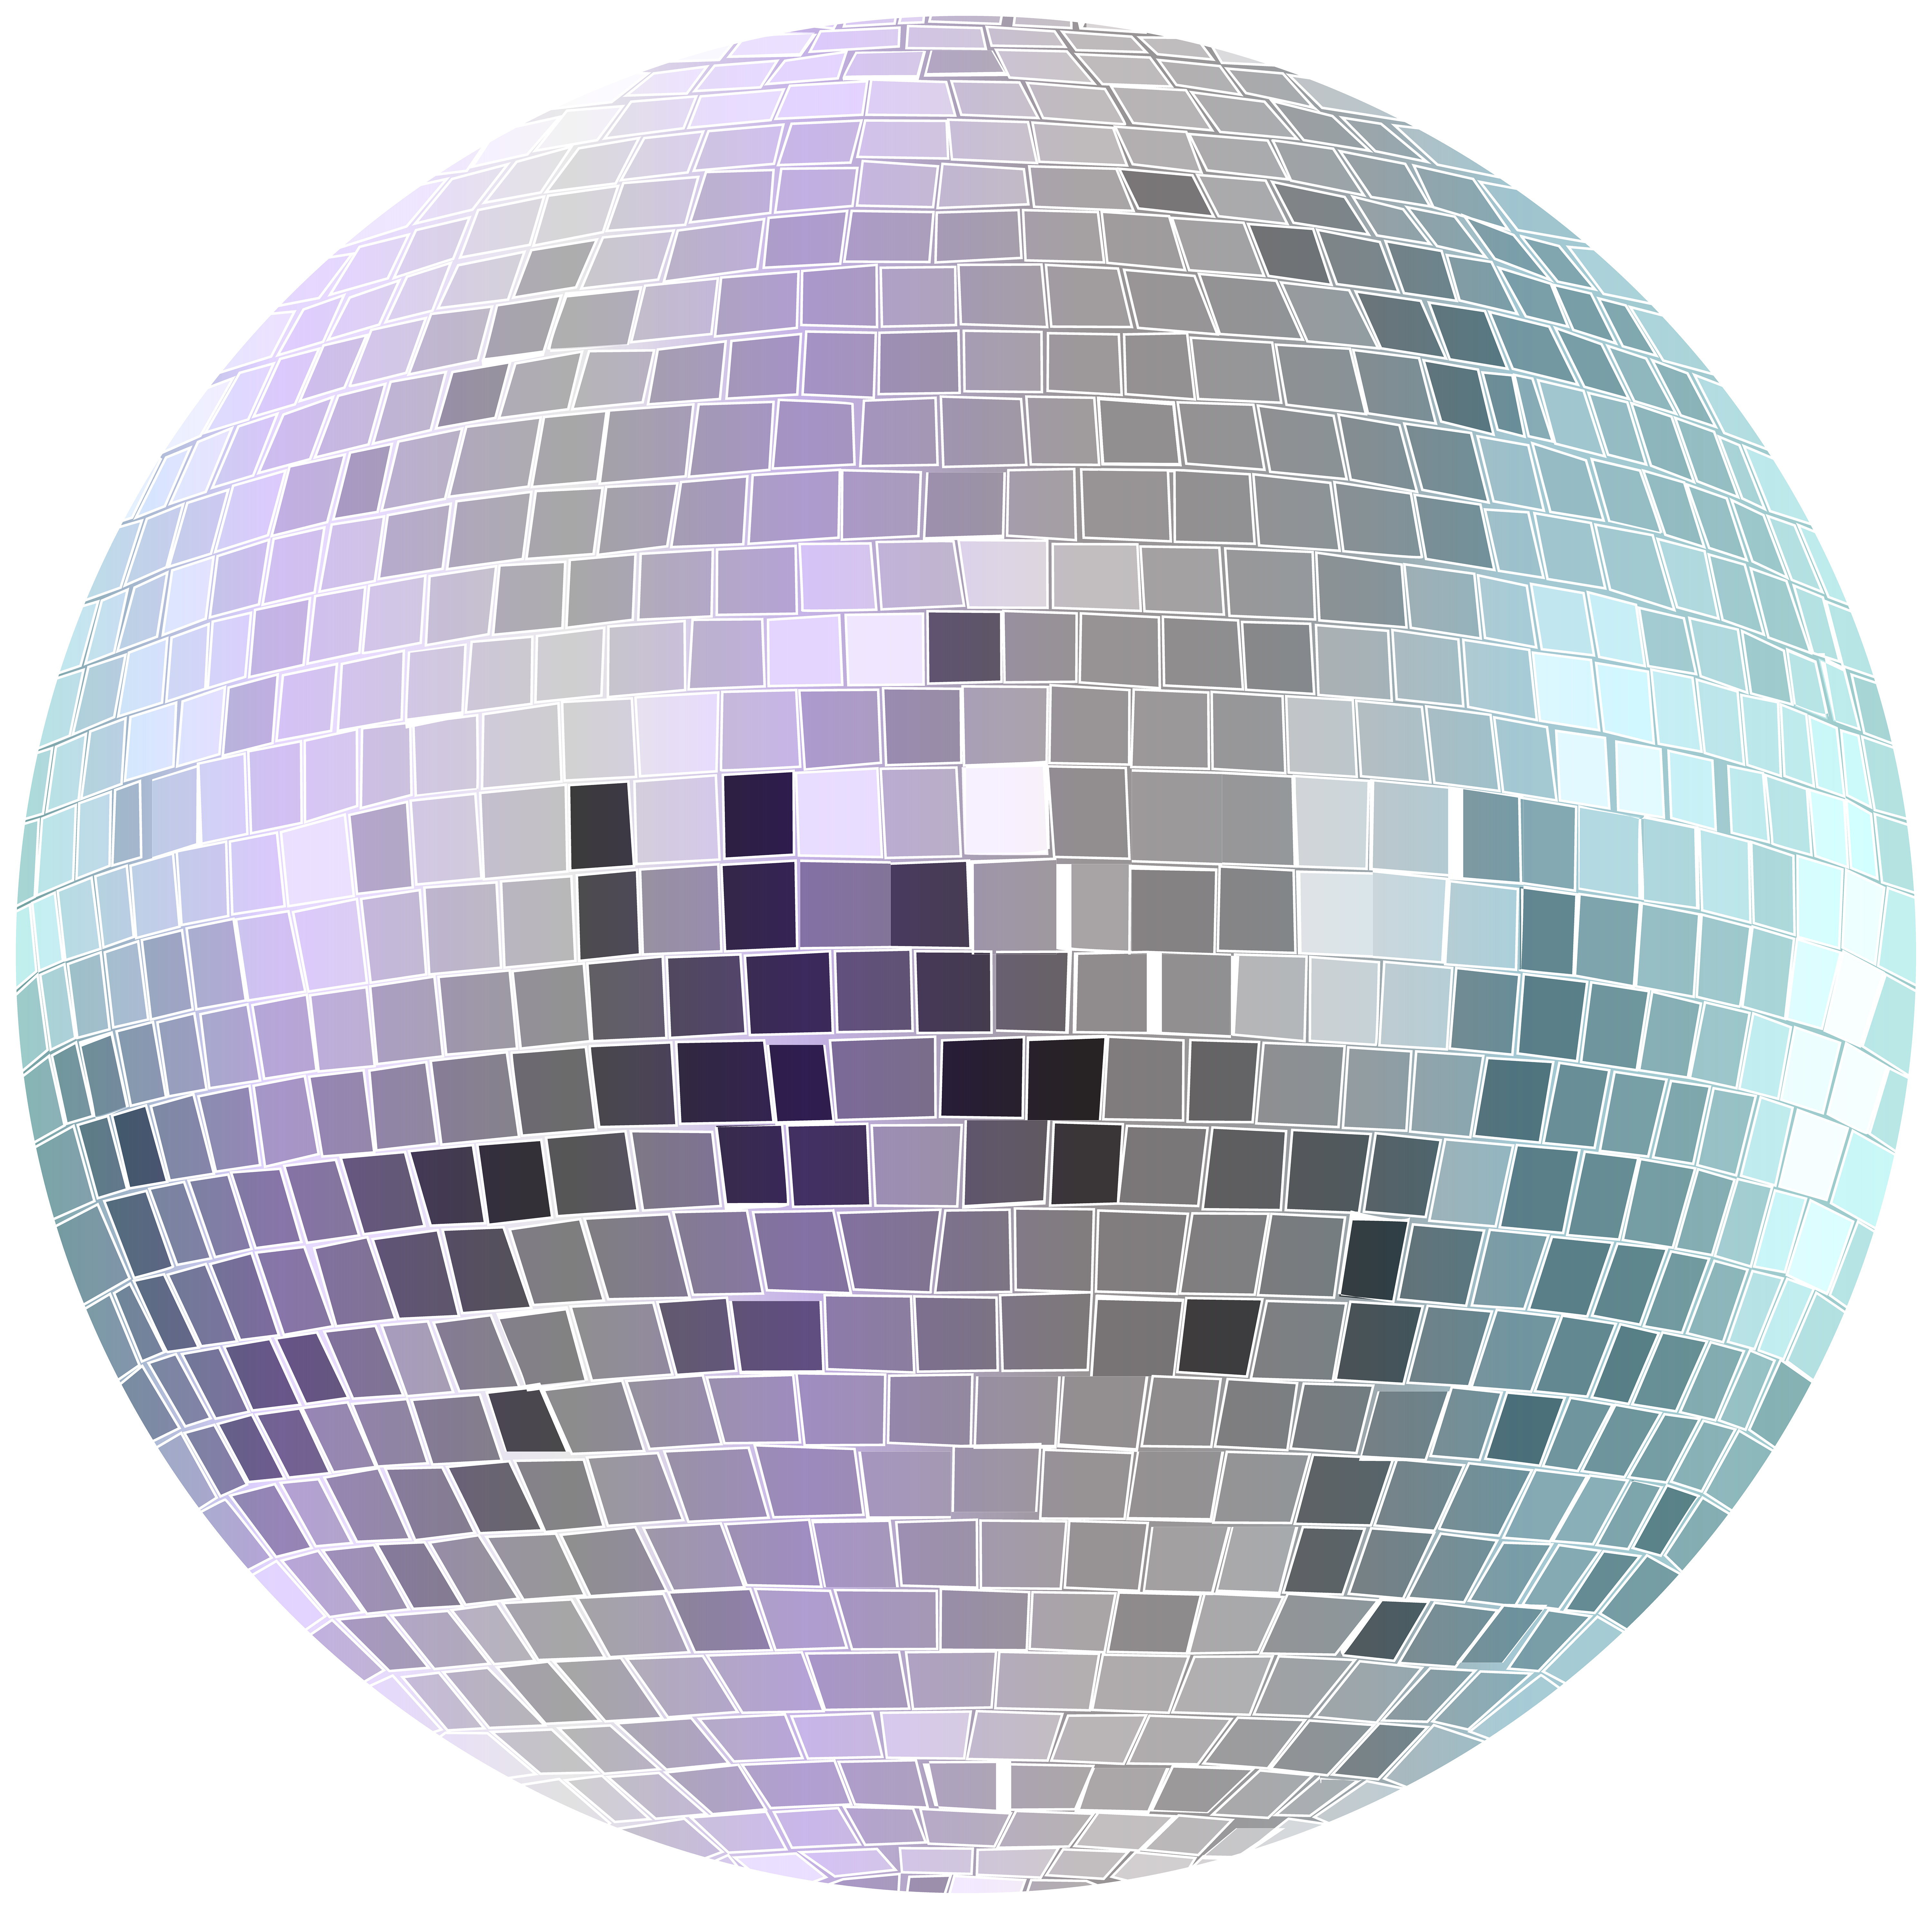 Disco Ball Transparent Clip Art Image | Gallery Yopriceville - High